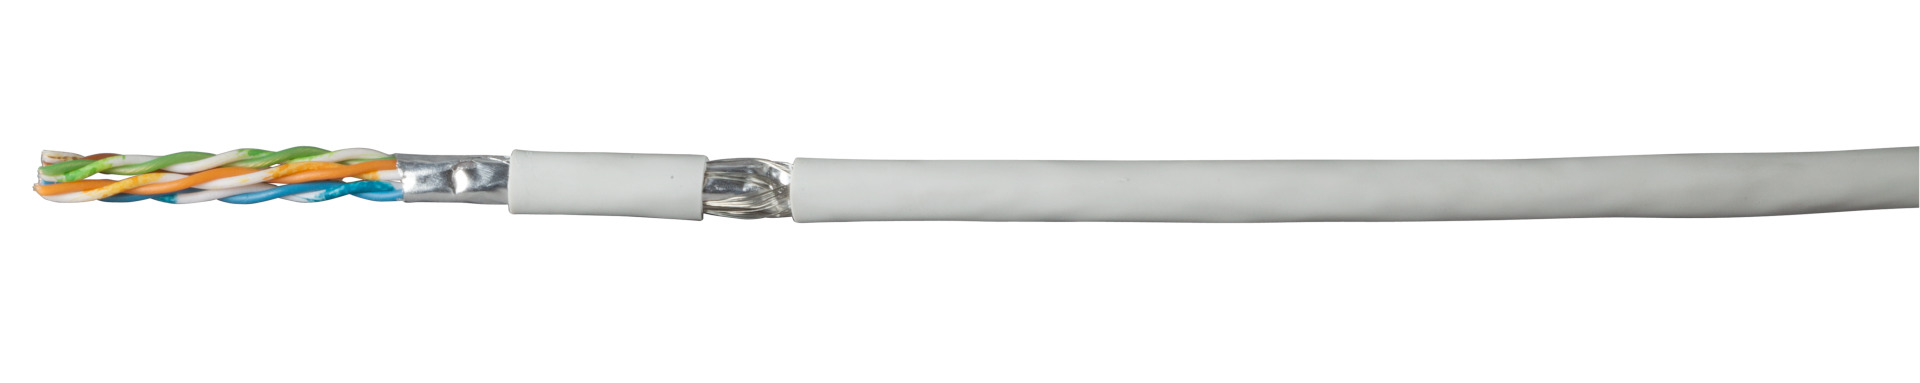 MegaLine D1-20 SF/U flex 4P Y, SPACE Code 20123 PVC, light grey RAL 7035